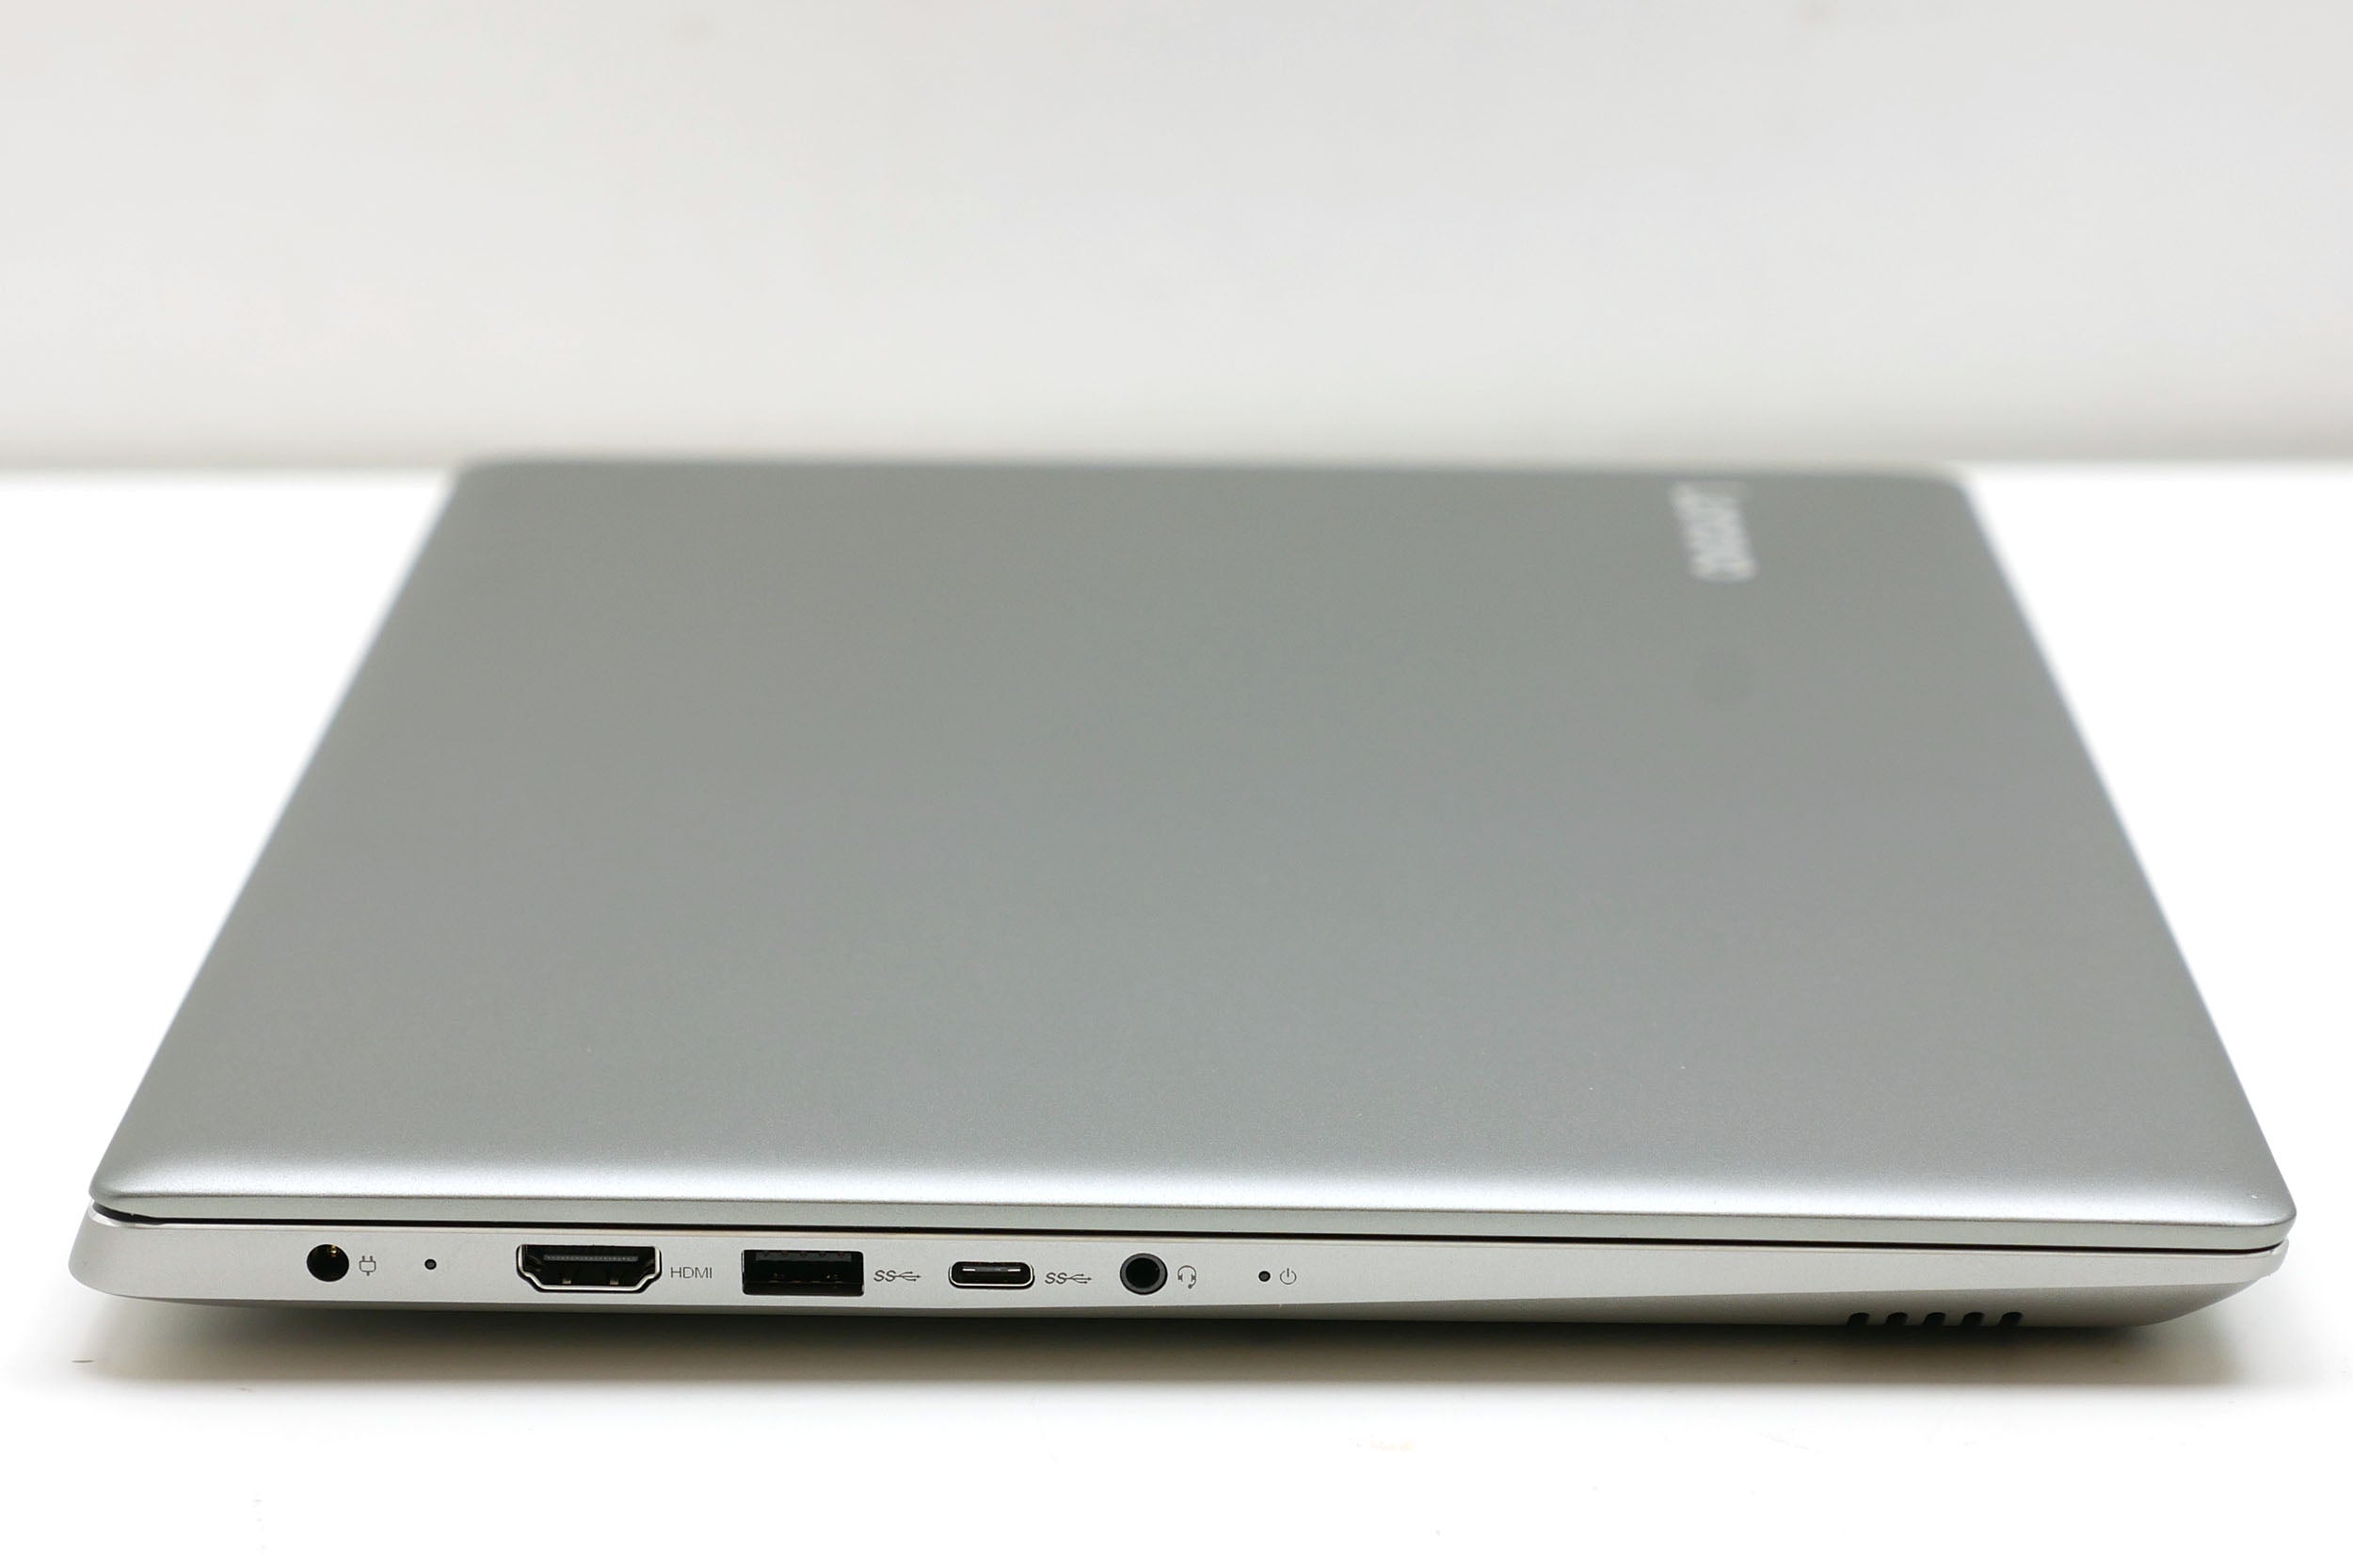 Lenovo IdeaPad 520S laptop closed on white background.